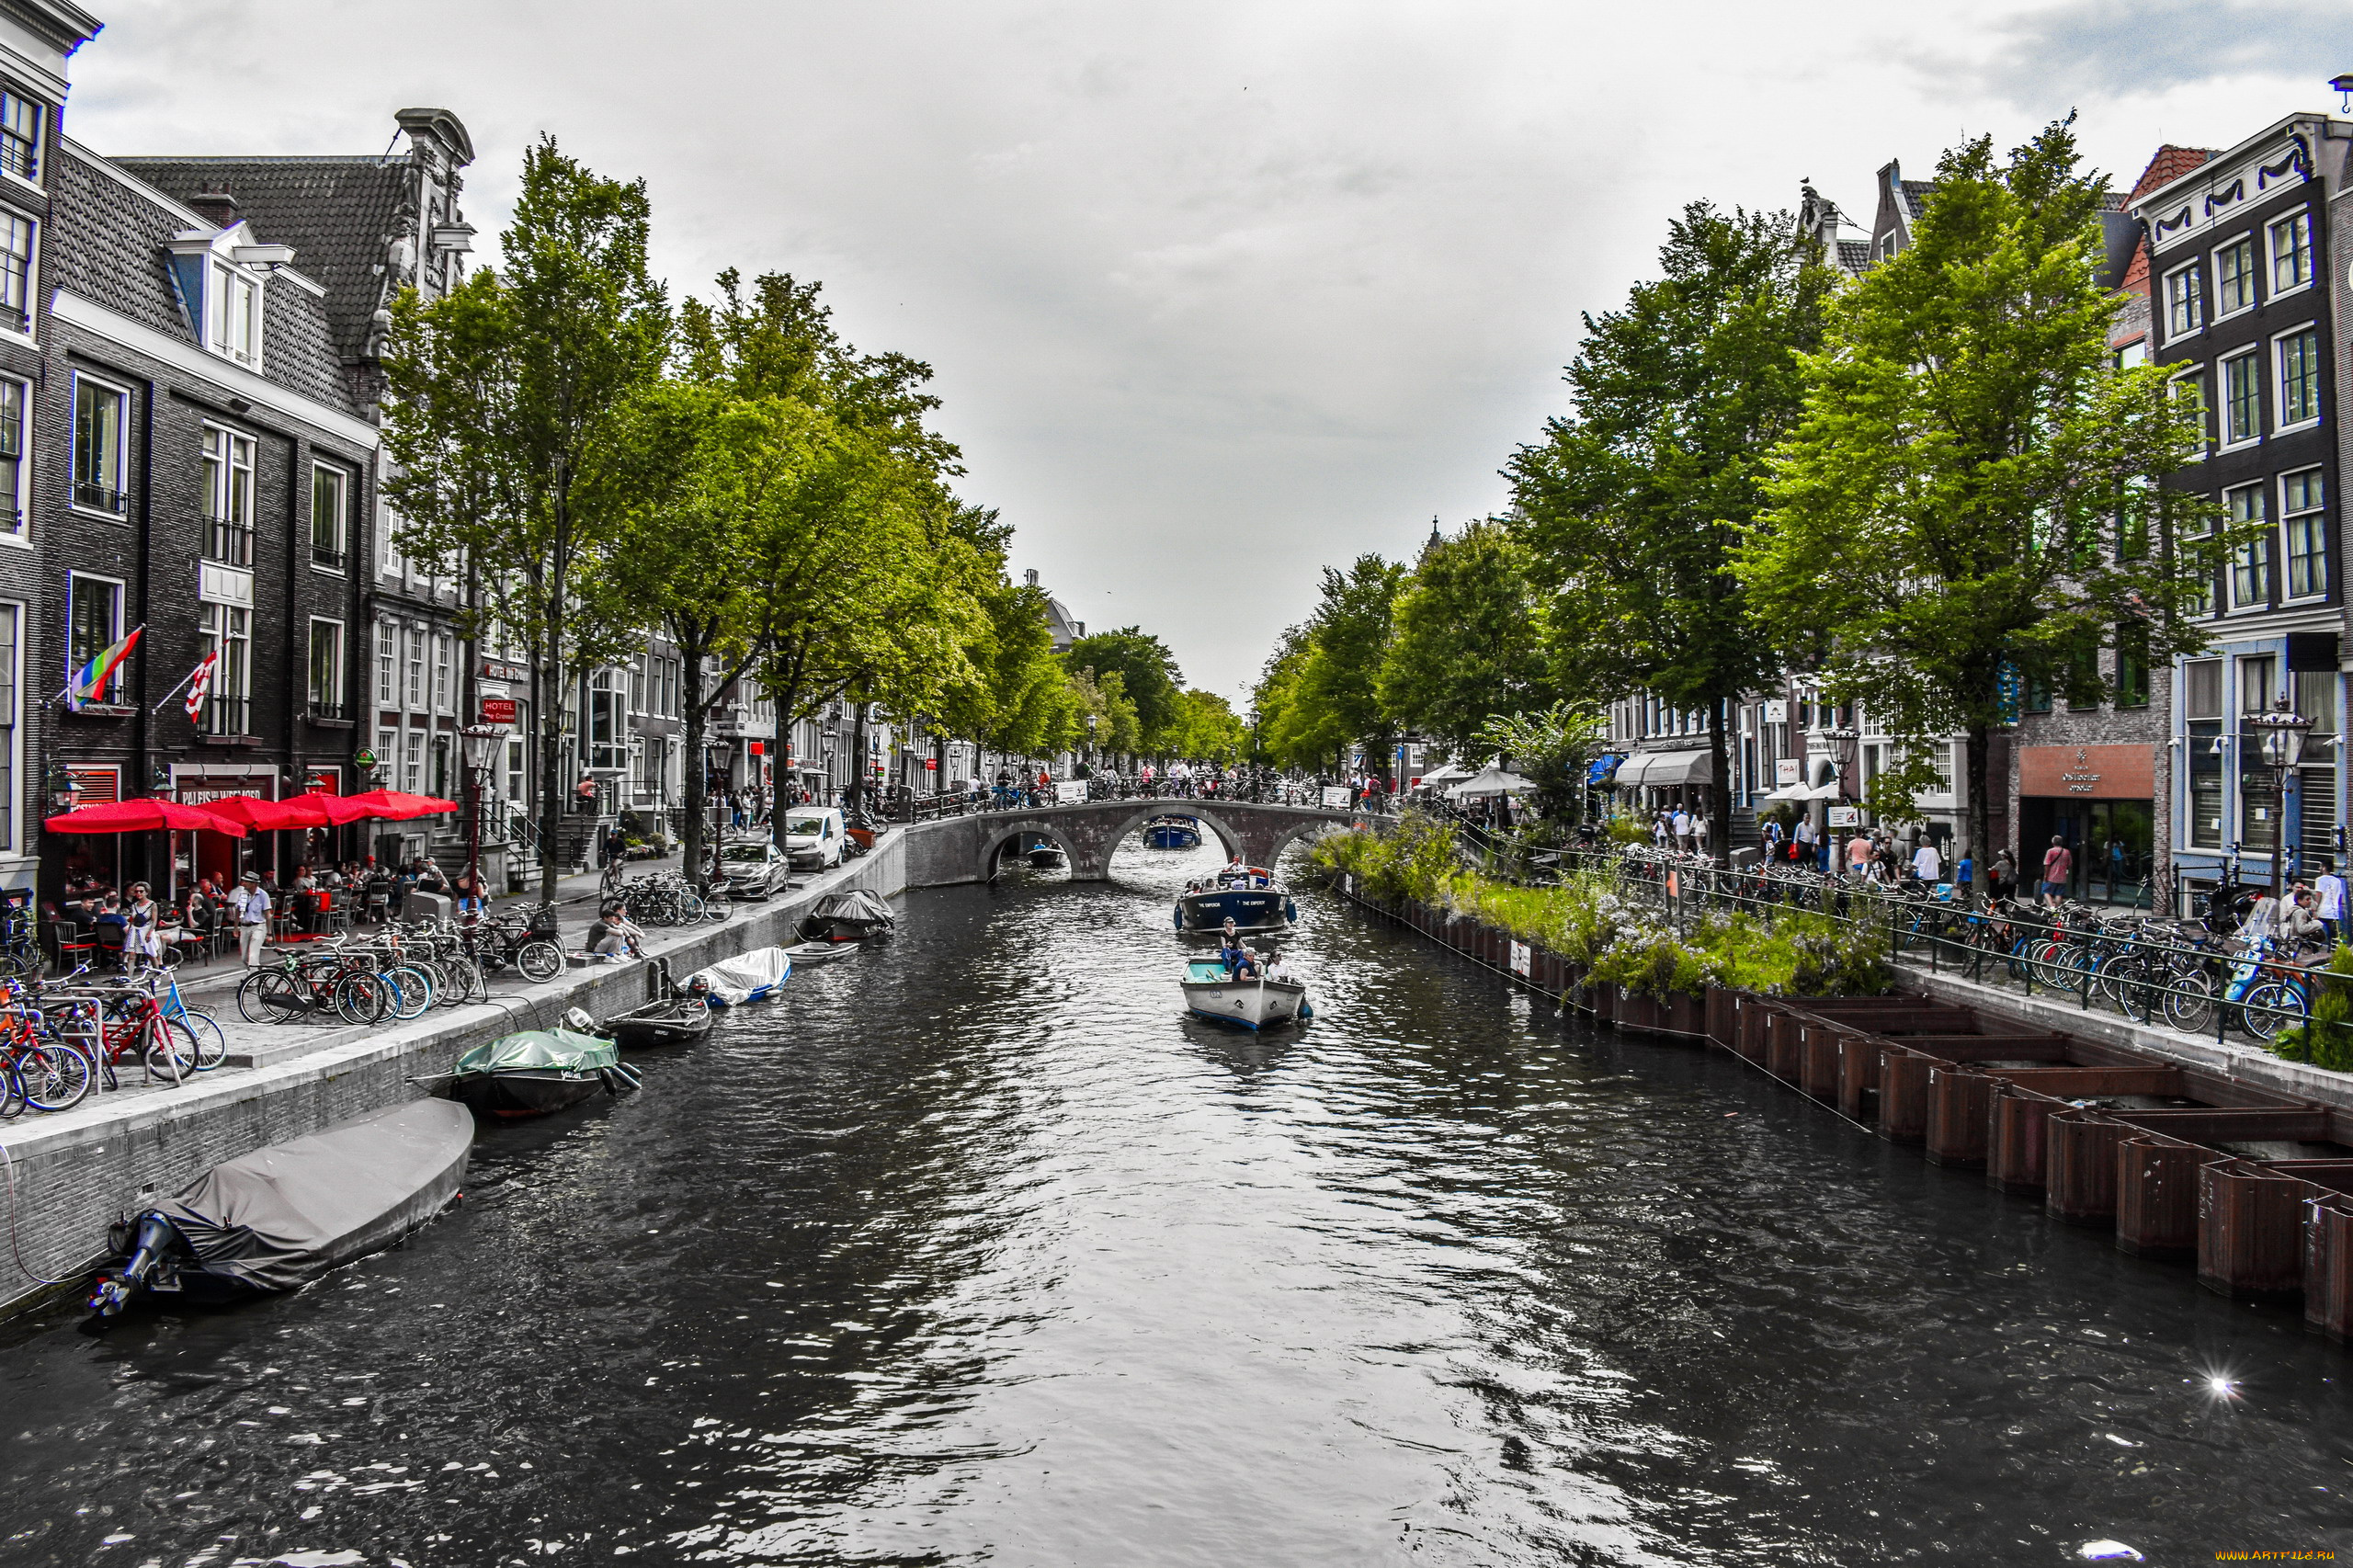 города, амстердам, , нидерланды, канал, мост, набережная, туристы, лодки